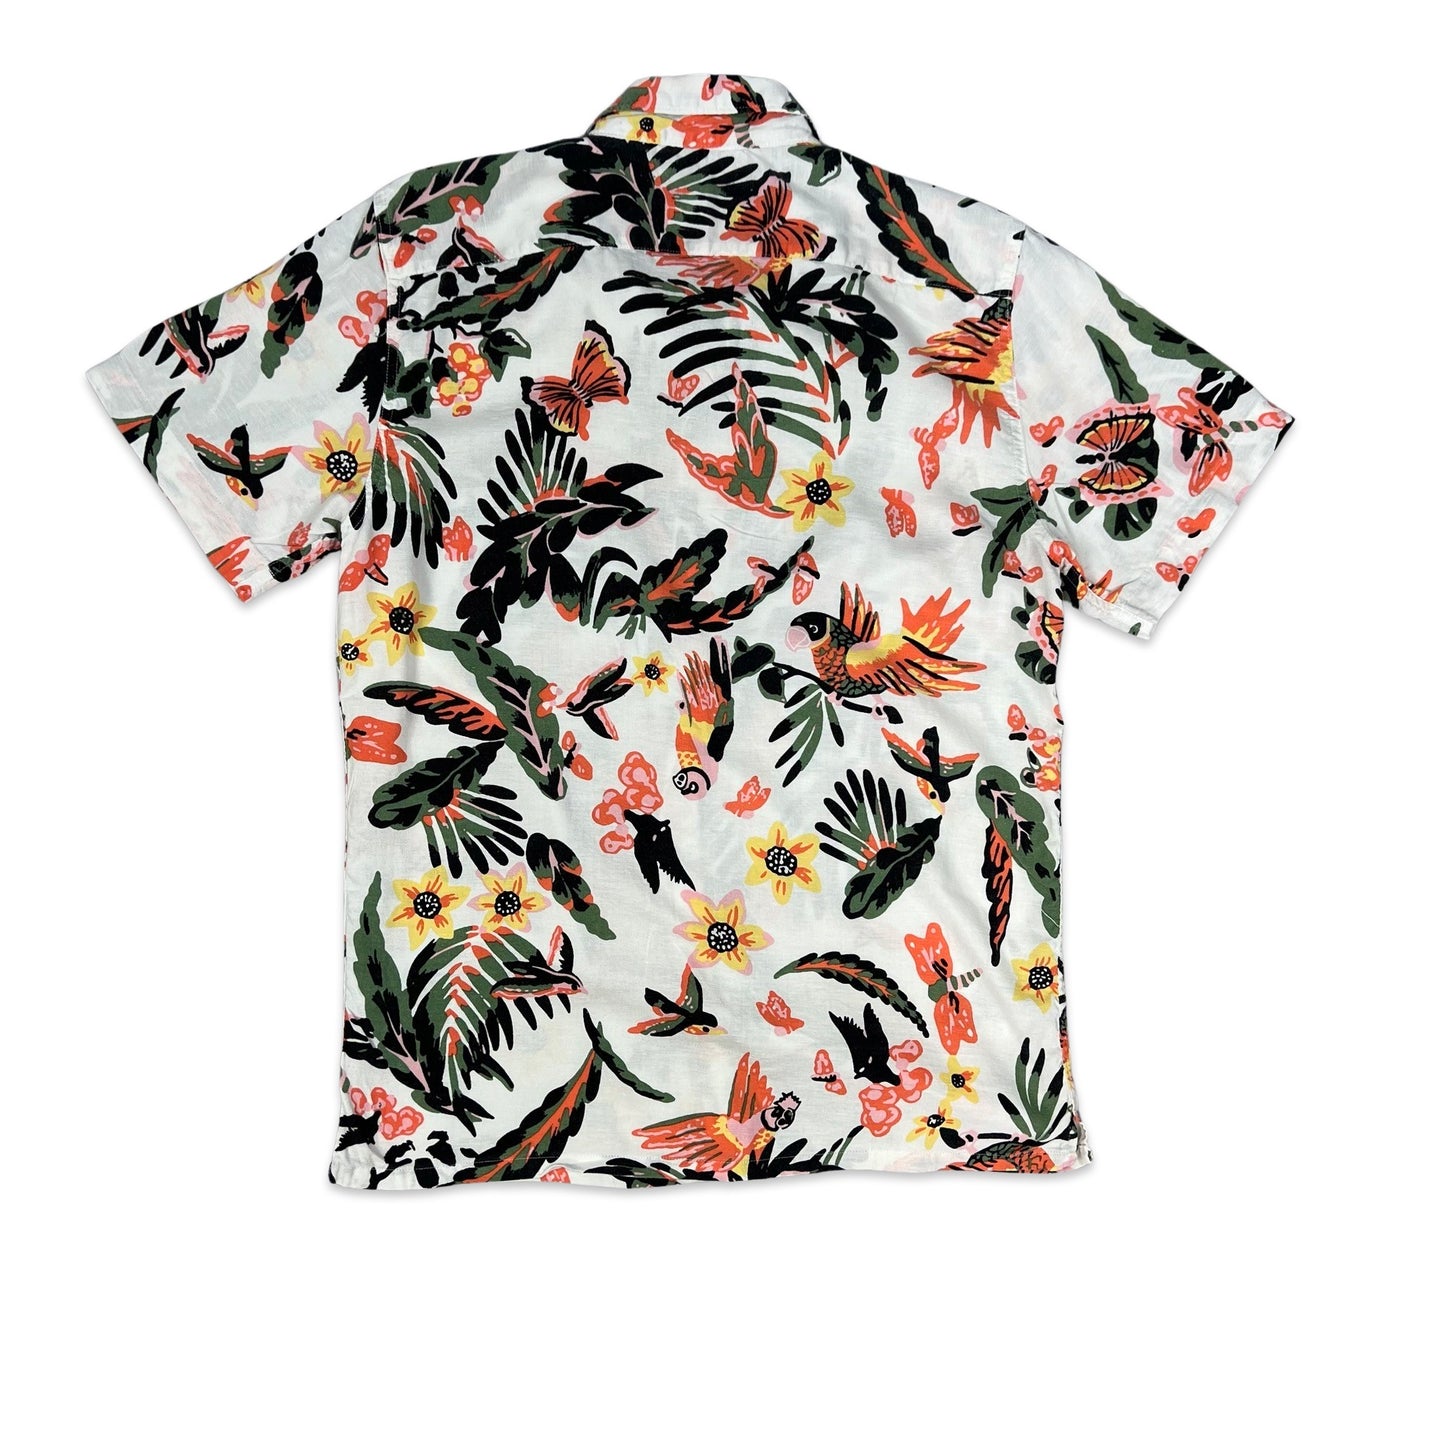 Levi's Botanical Print Hawaiian Shirt S M